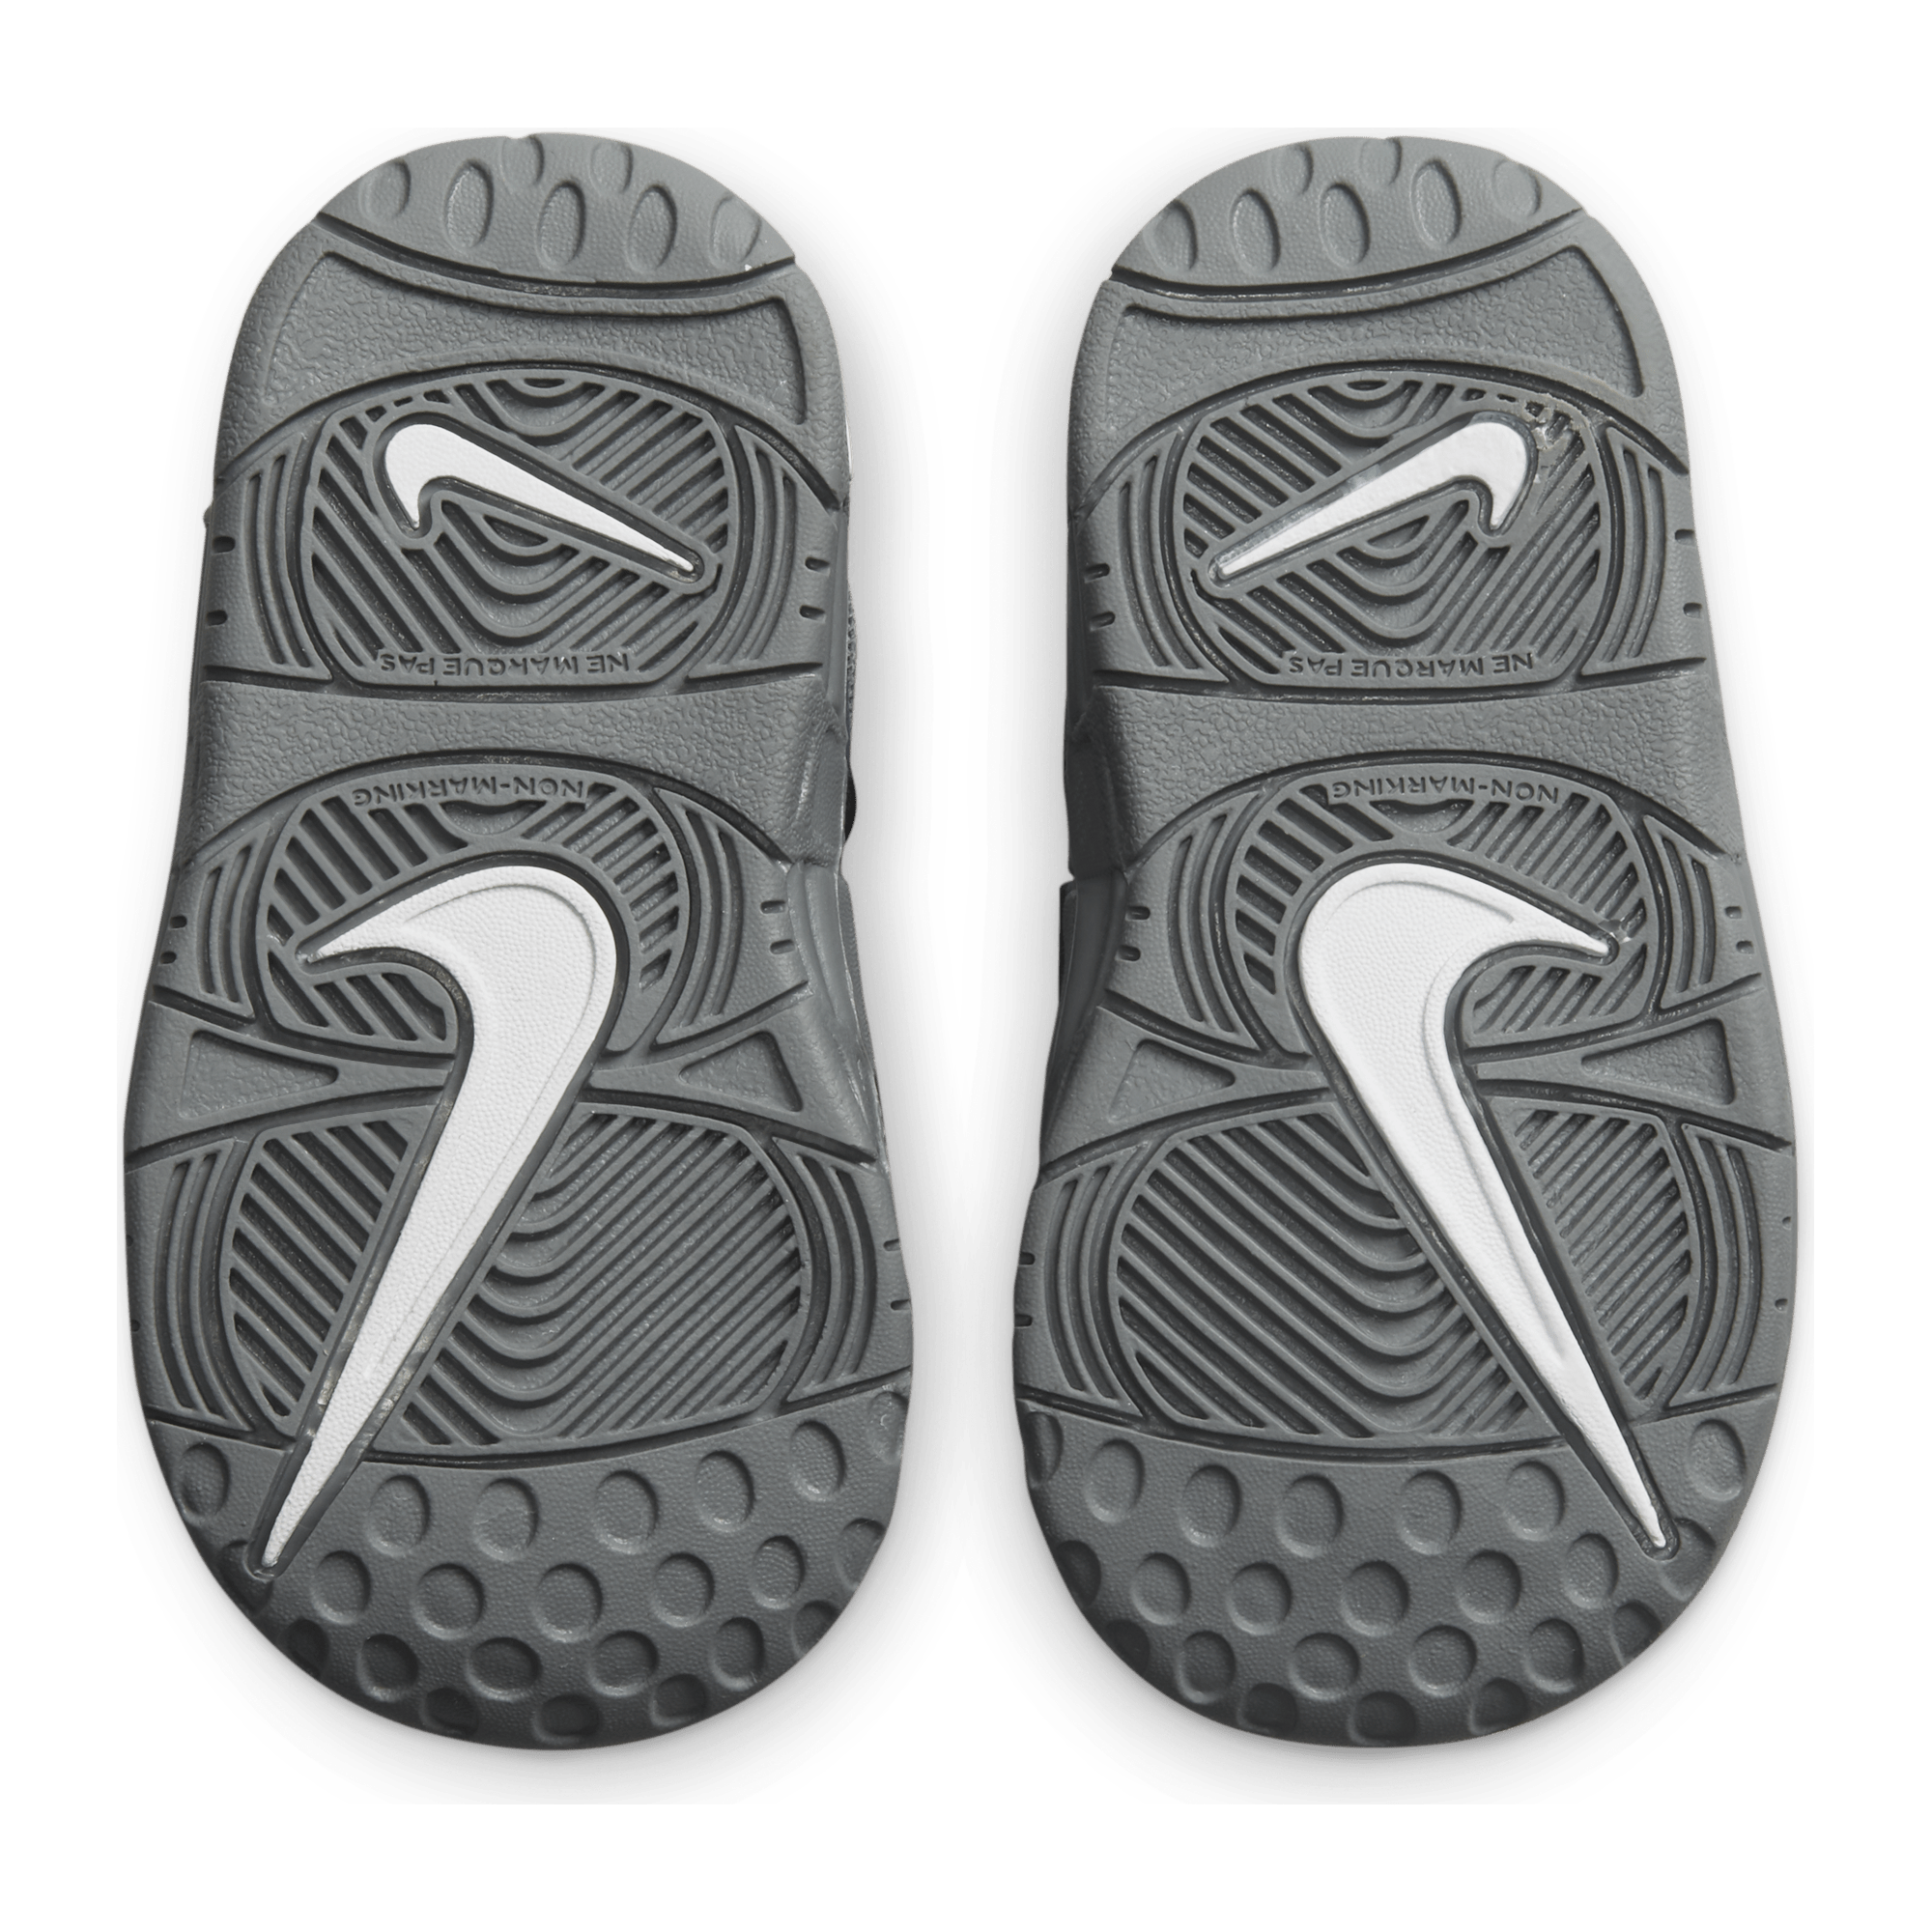 Nike Footwear Nike Air More Uptempo- Toddler